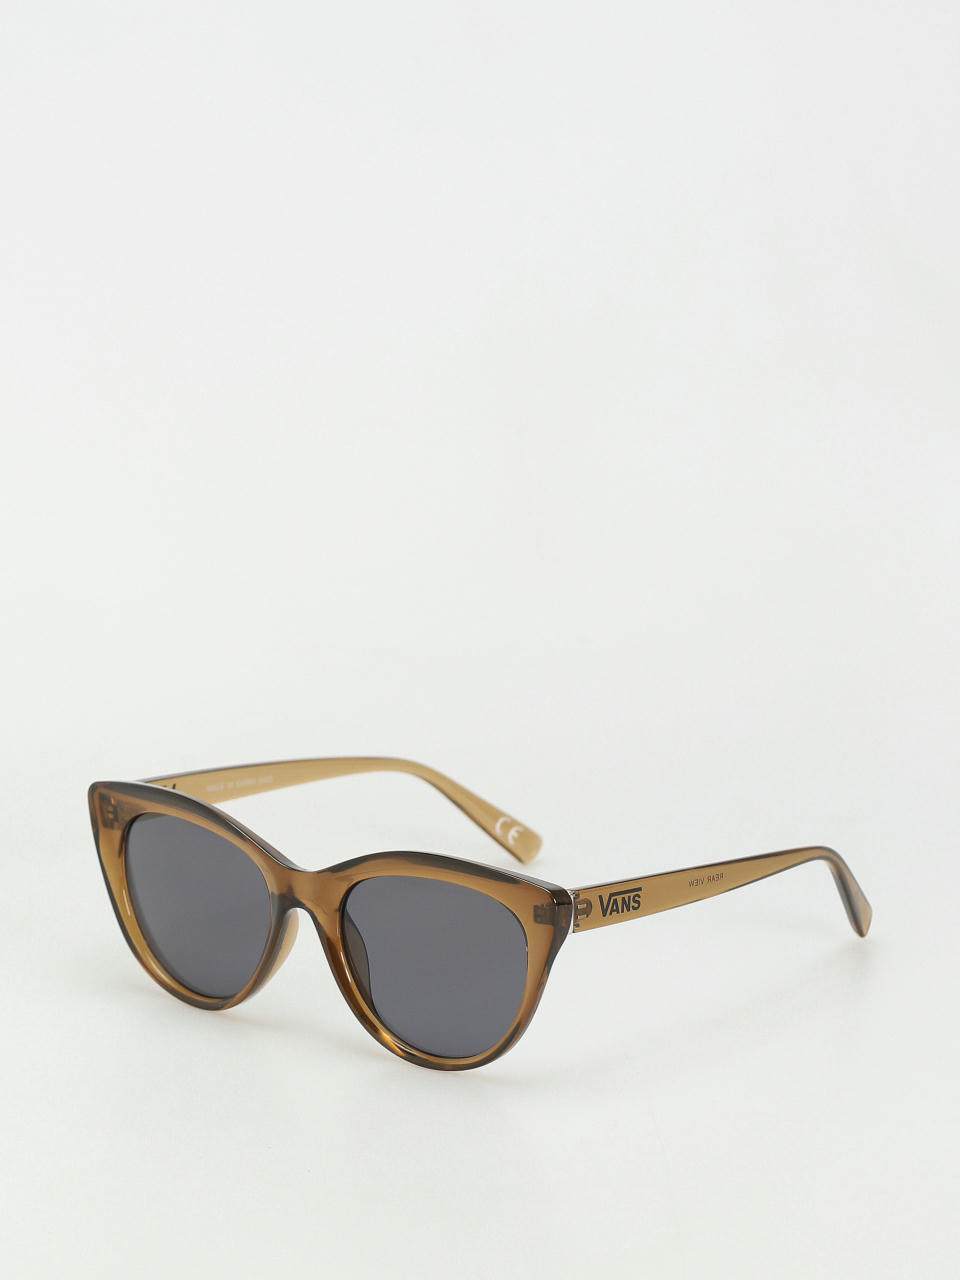 https://static.super-shop.com/1413637-vans-rear-view-sunglasses-wmn-golden-brown.jpg?w=960